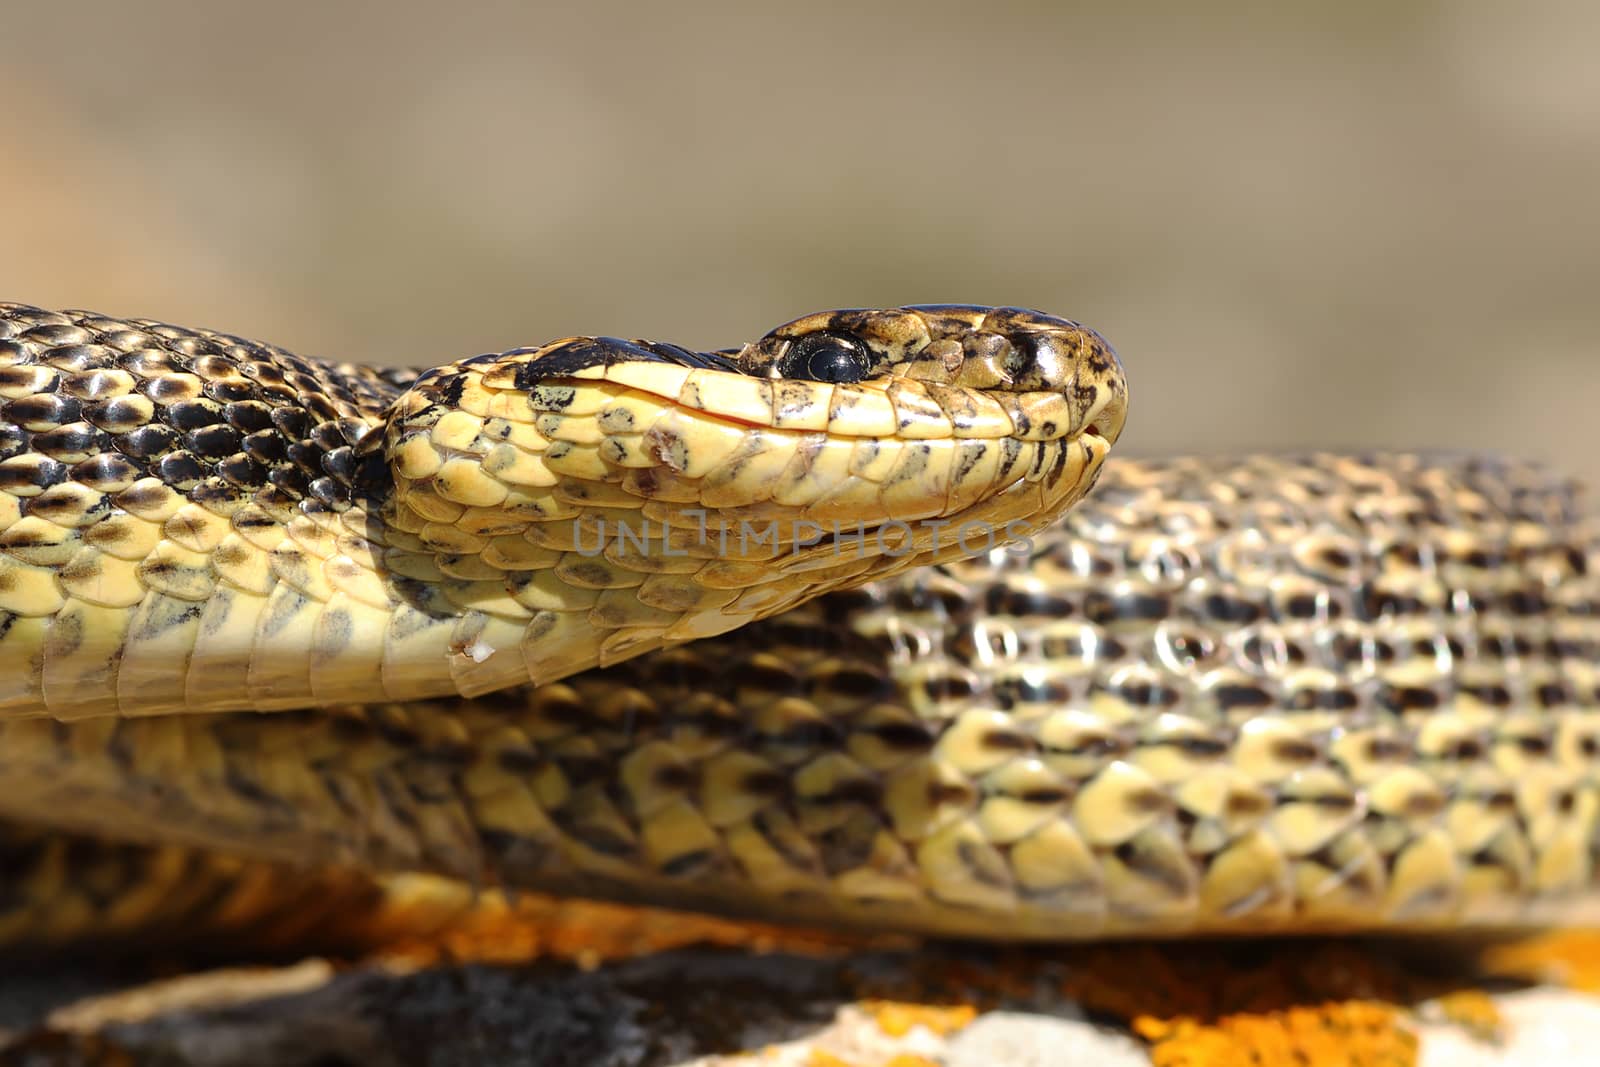 blotched snake macro image by taviphoto